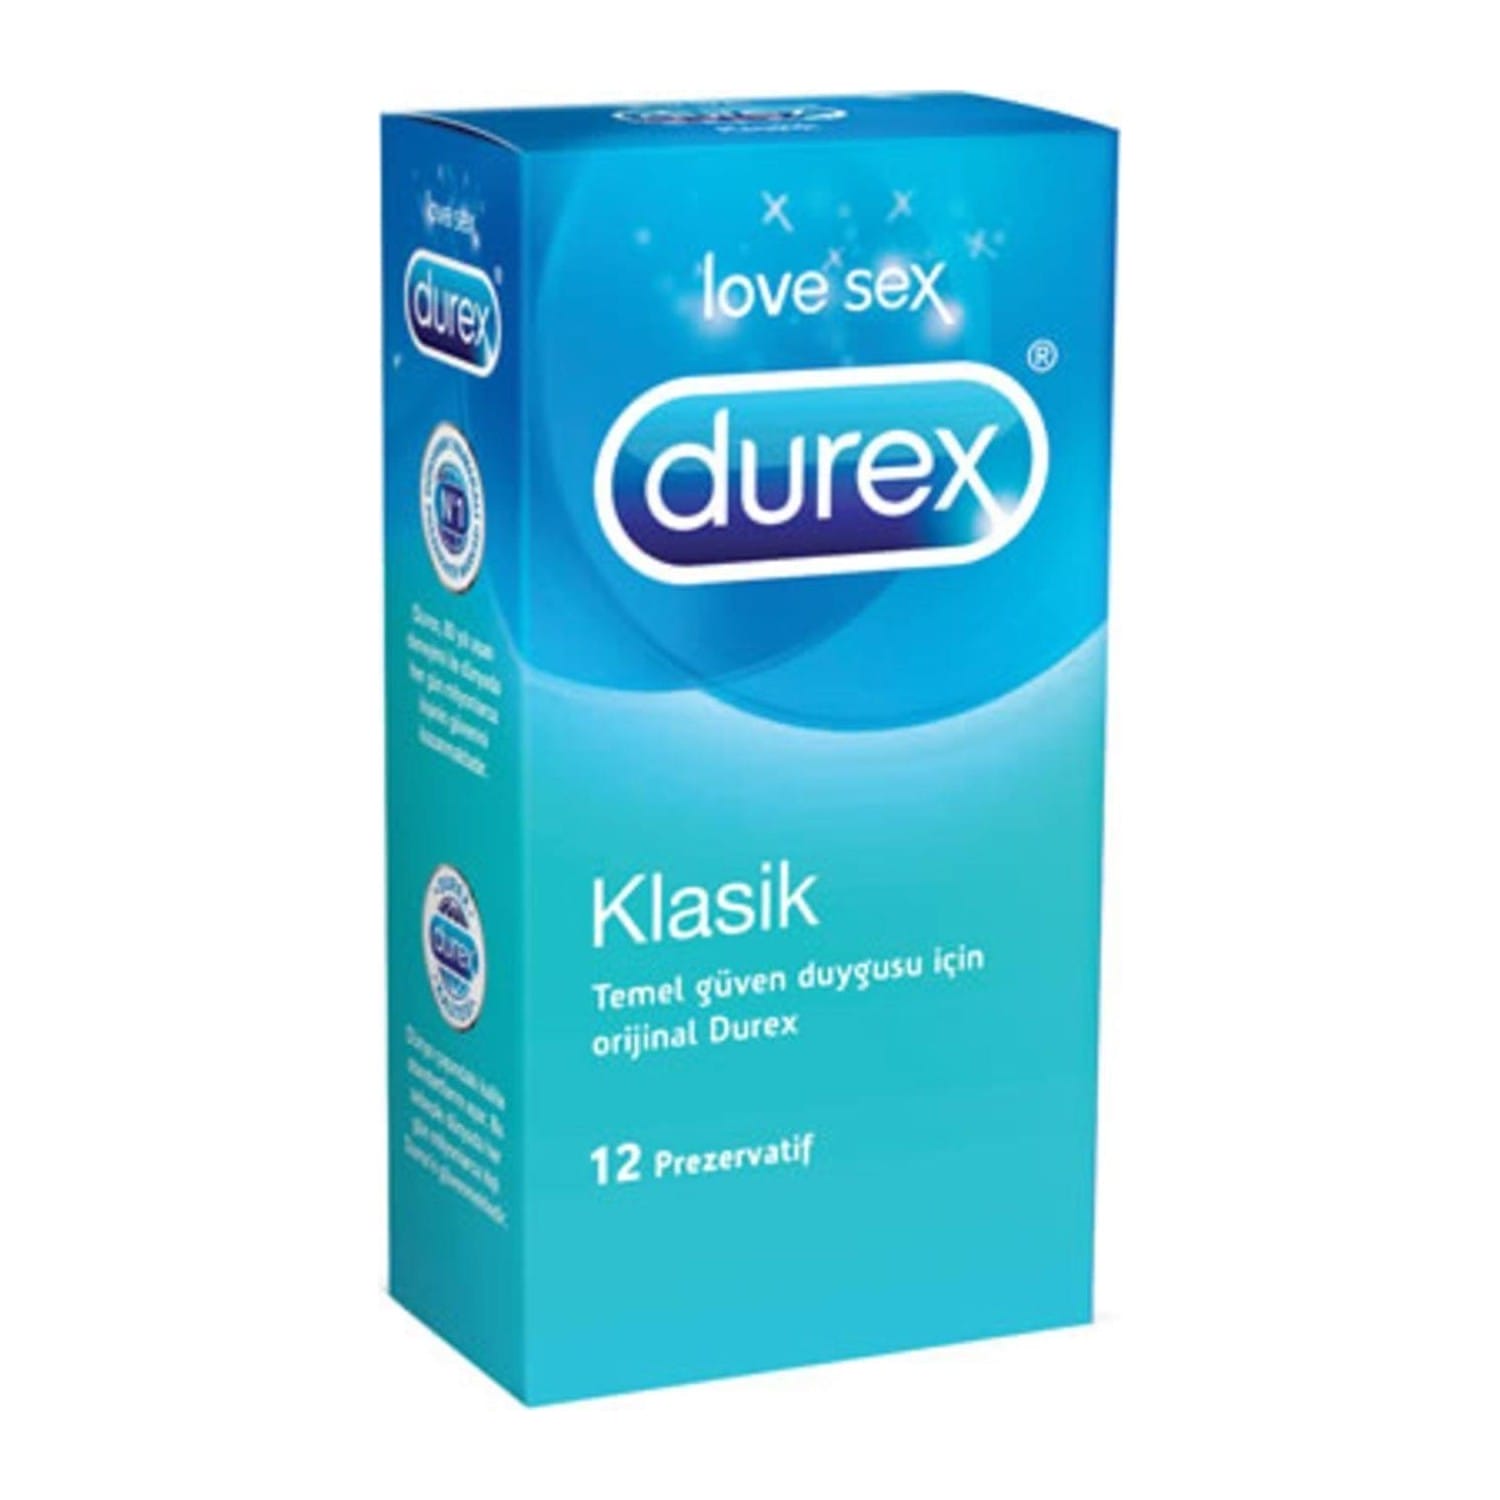 durex-kondom-klasik-12-adet-expay-global